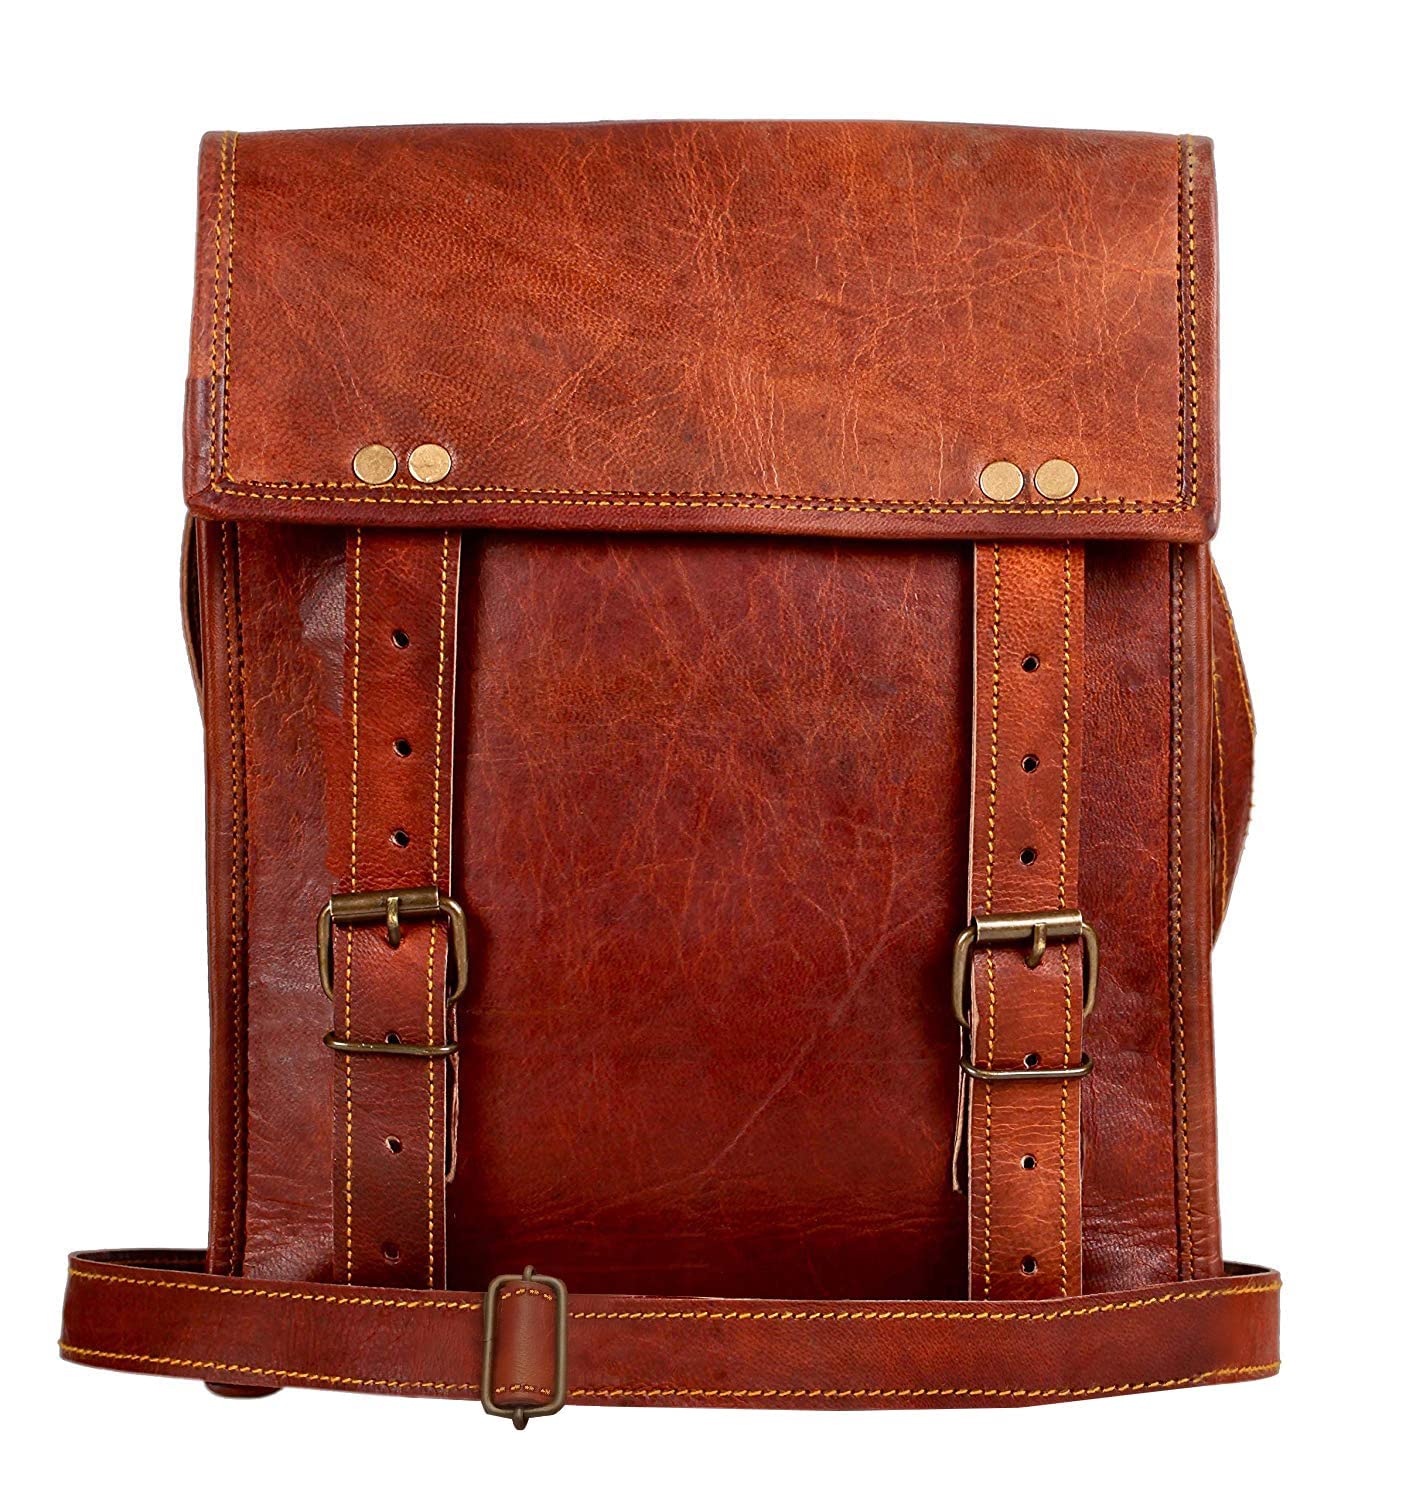 Leather Ipad Messenger Bag — The Handmade Store